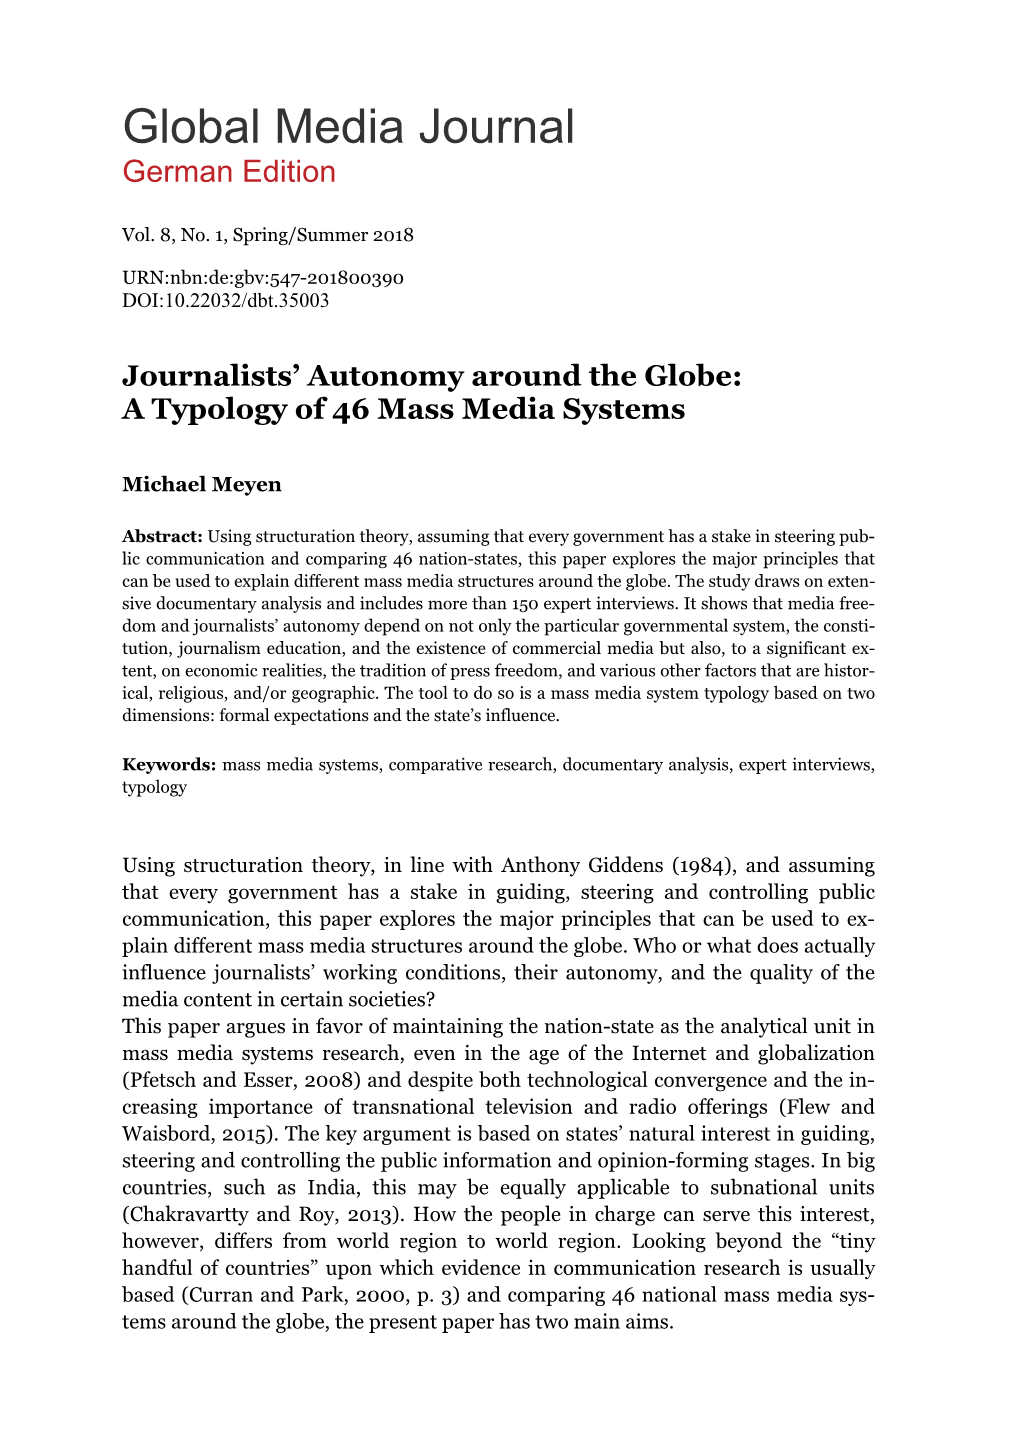 Global Media Journal German Edition